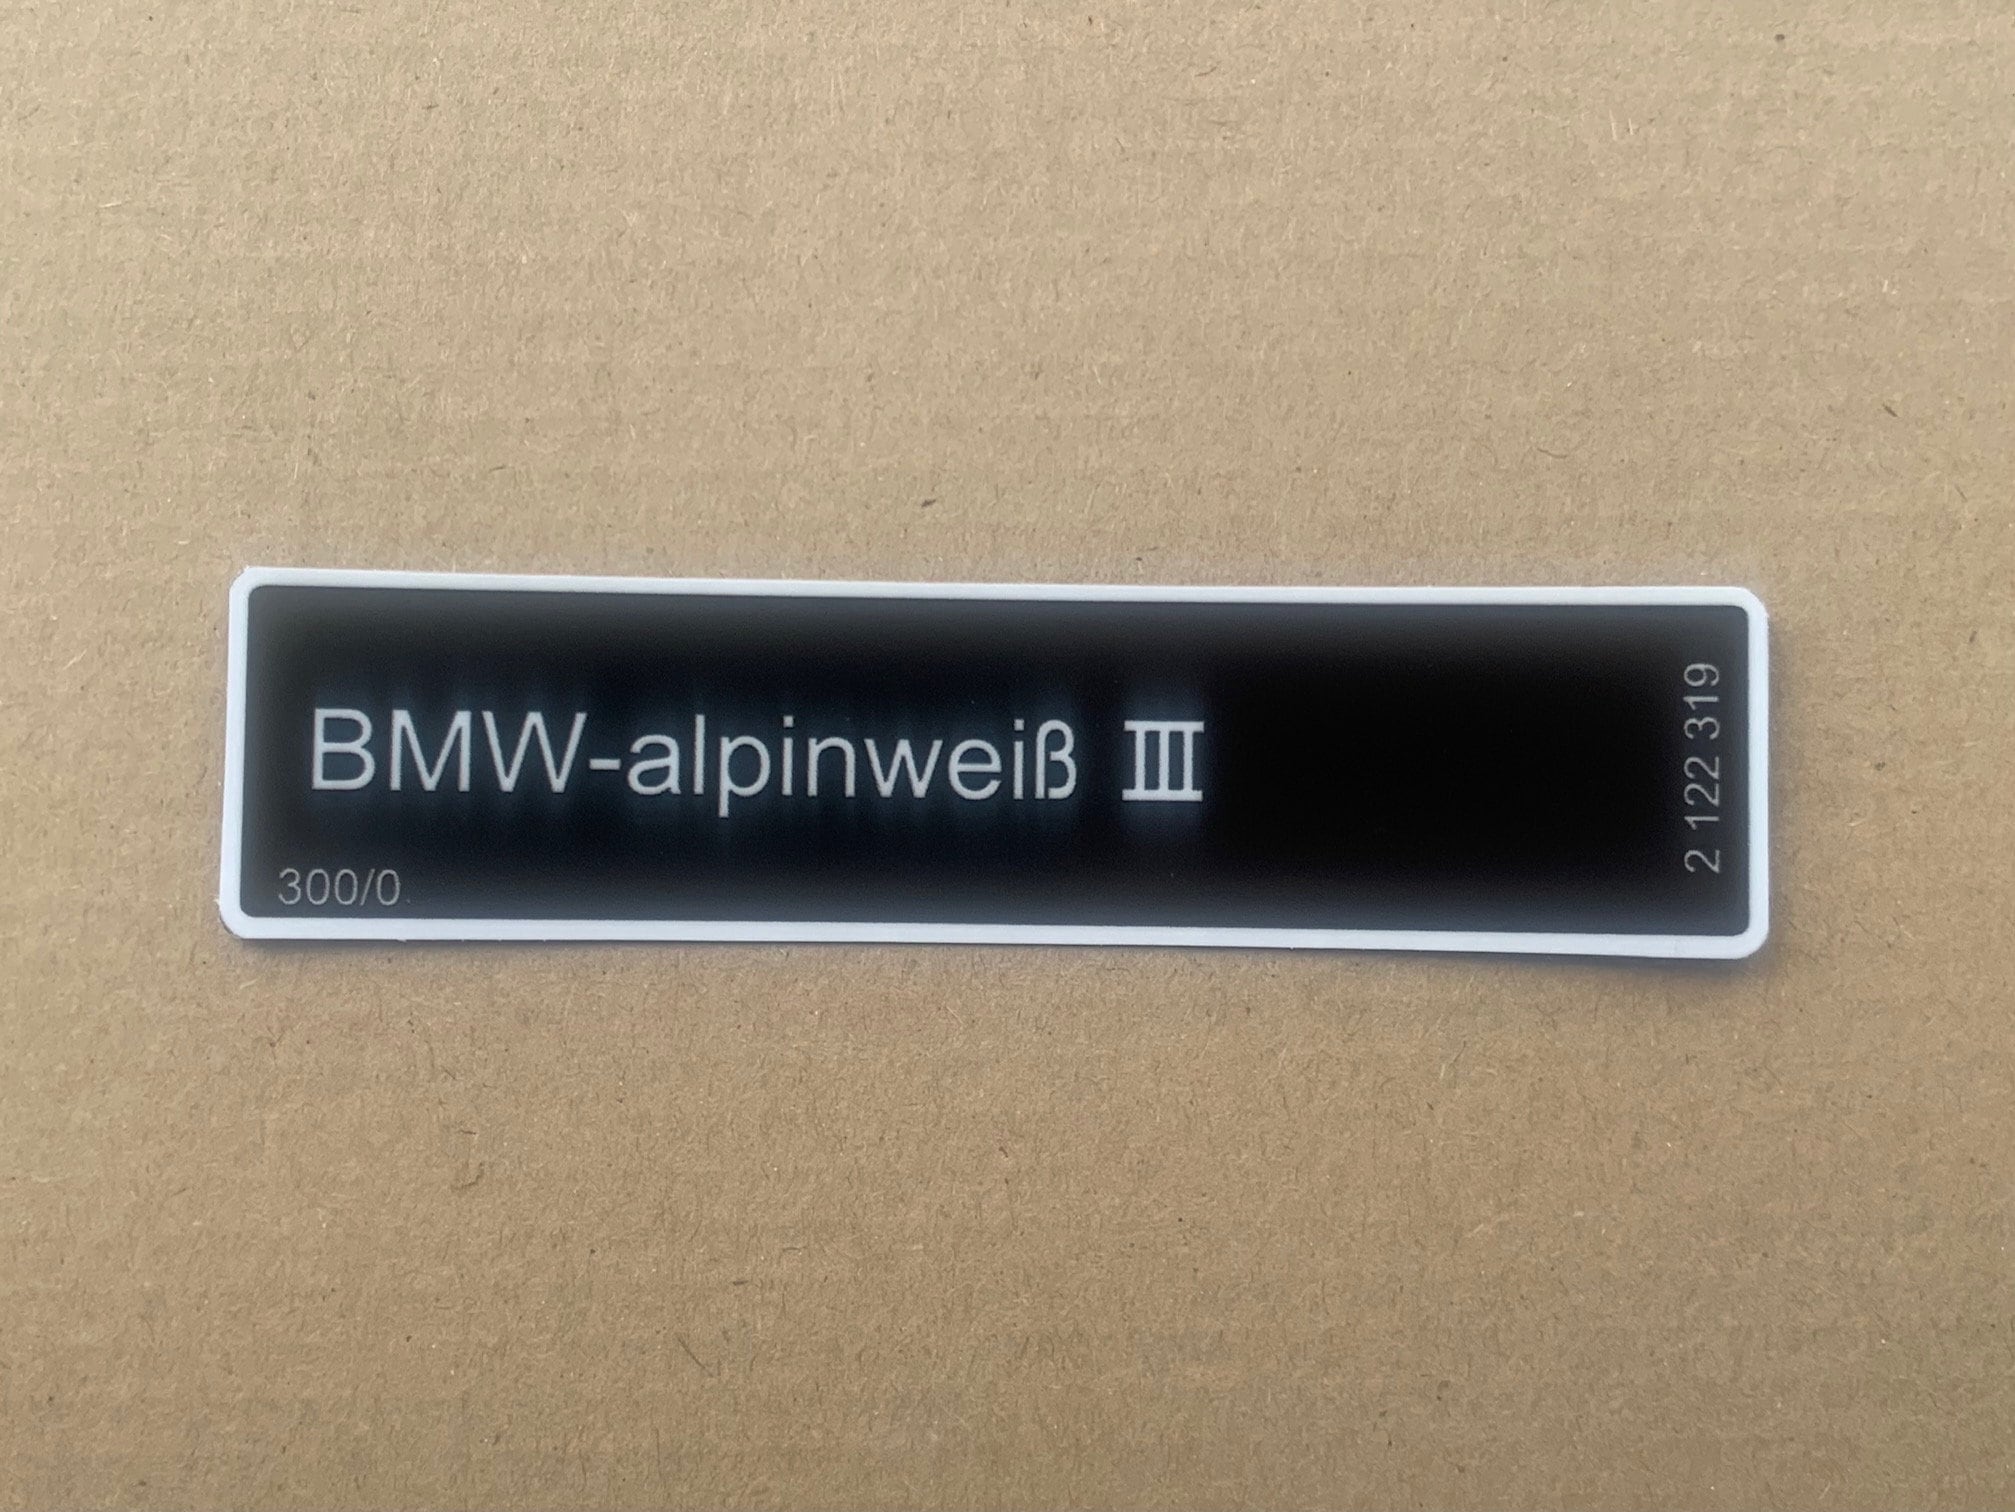 Buy 1x Bmw-alpinweiß III Alpinweiss III Paint Sticker Label E34 E36 E38 E46  Z3 M3 2122319 Online in India 